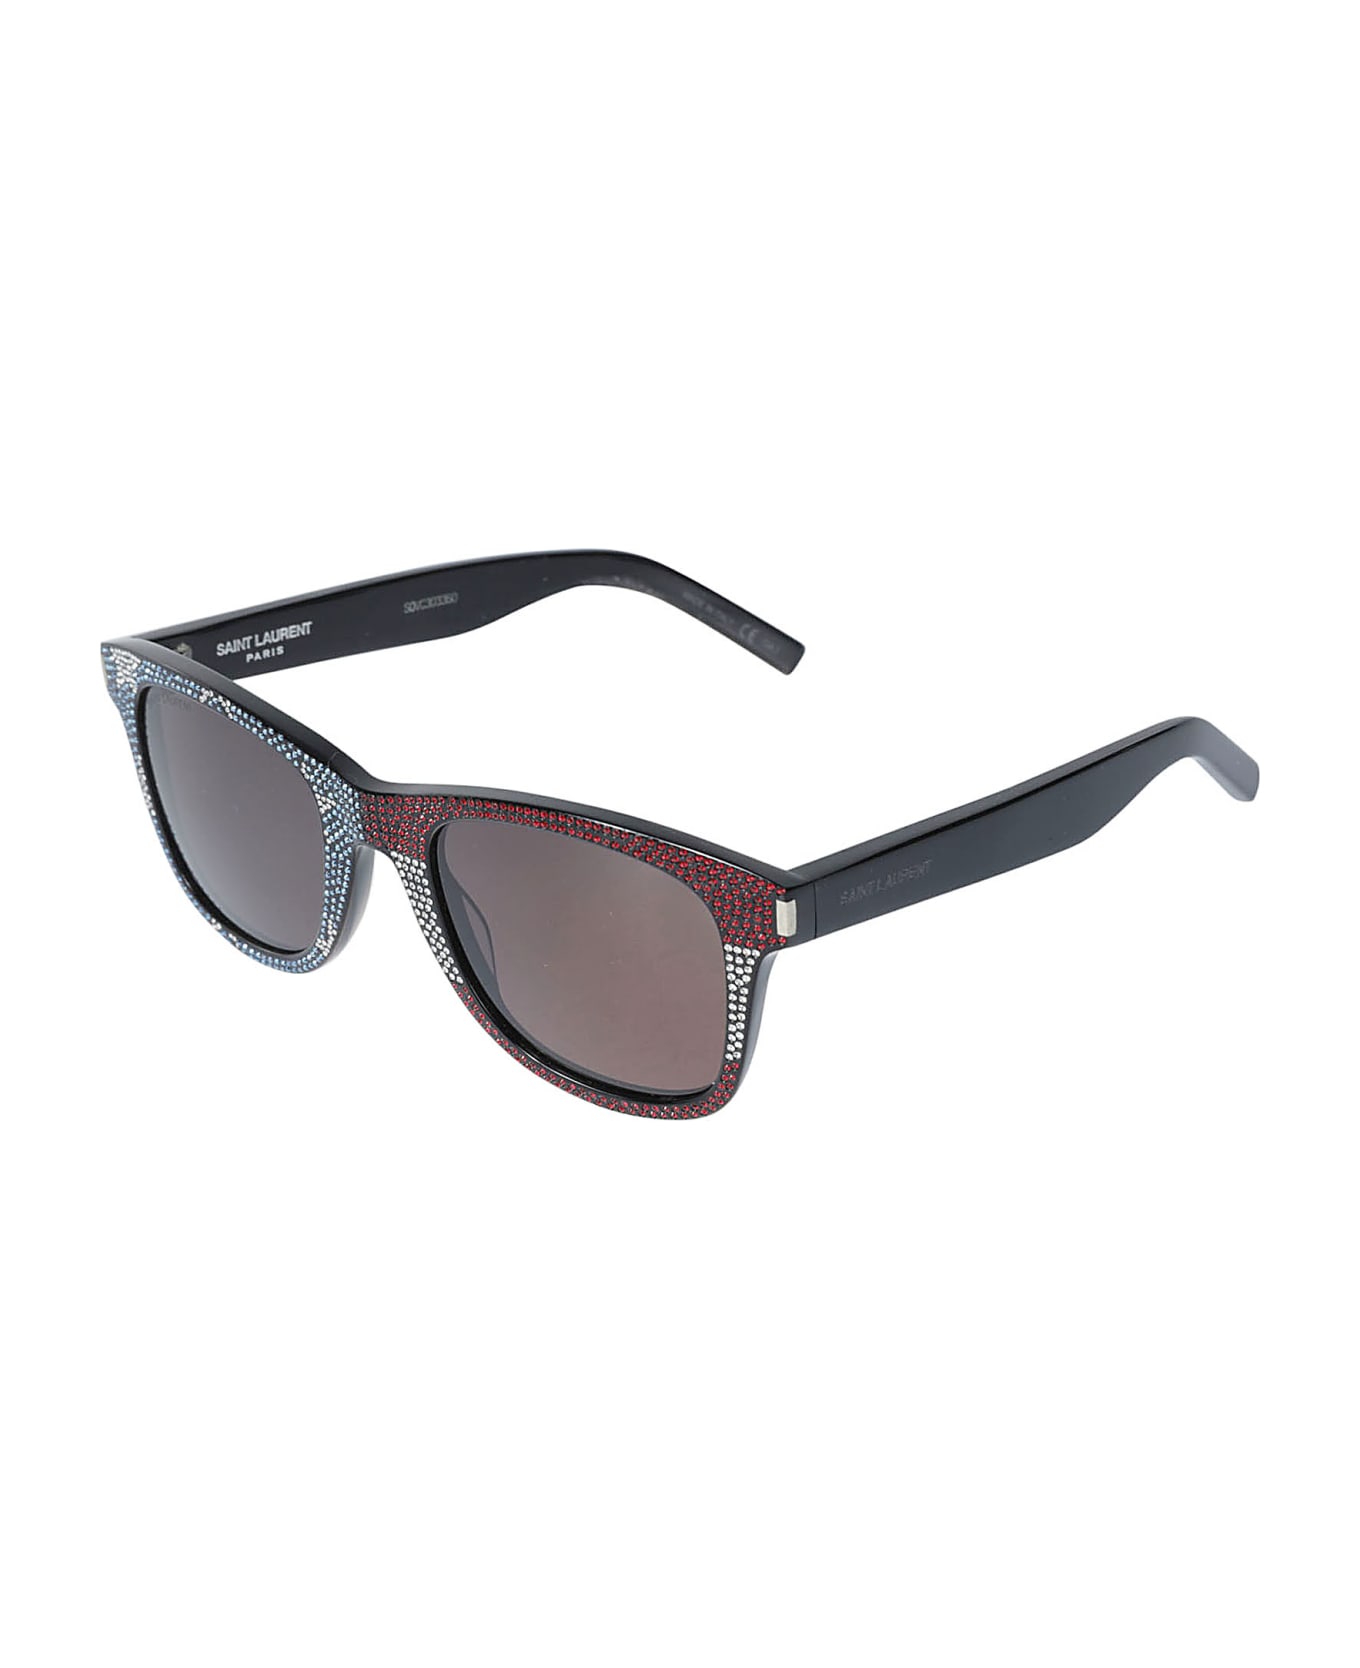 Saint Laurent Eyewear Square Frame Studded Sunglasses - Black/Grey